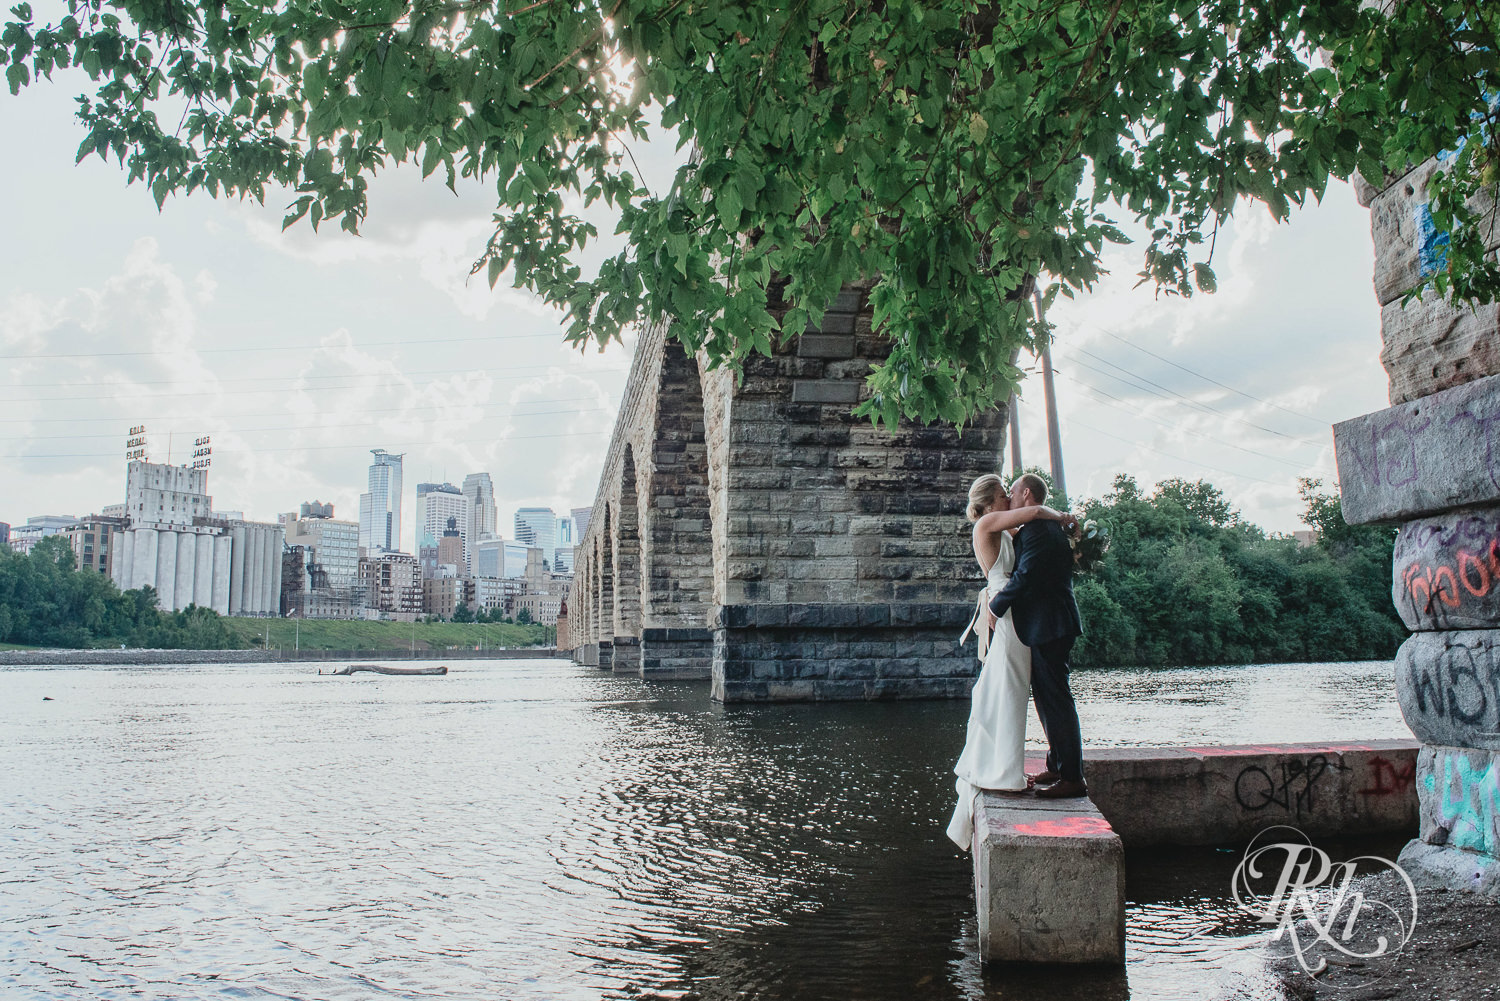 Bride and groom kiss under a bridge on their wedding day in Minneapolis, Minnesota.